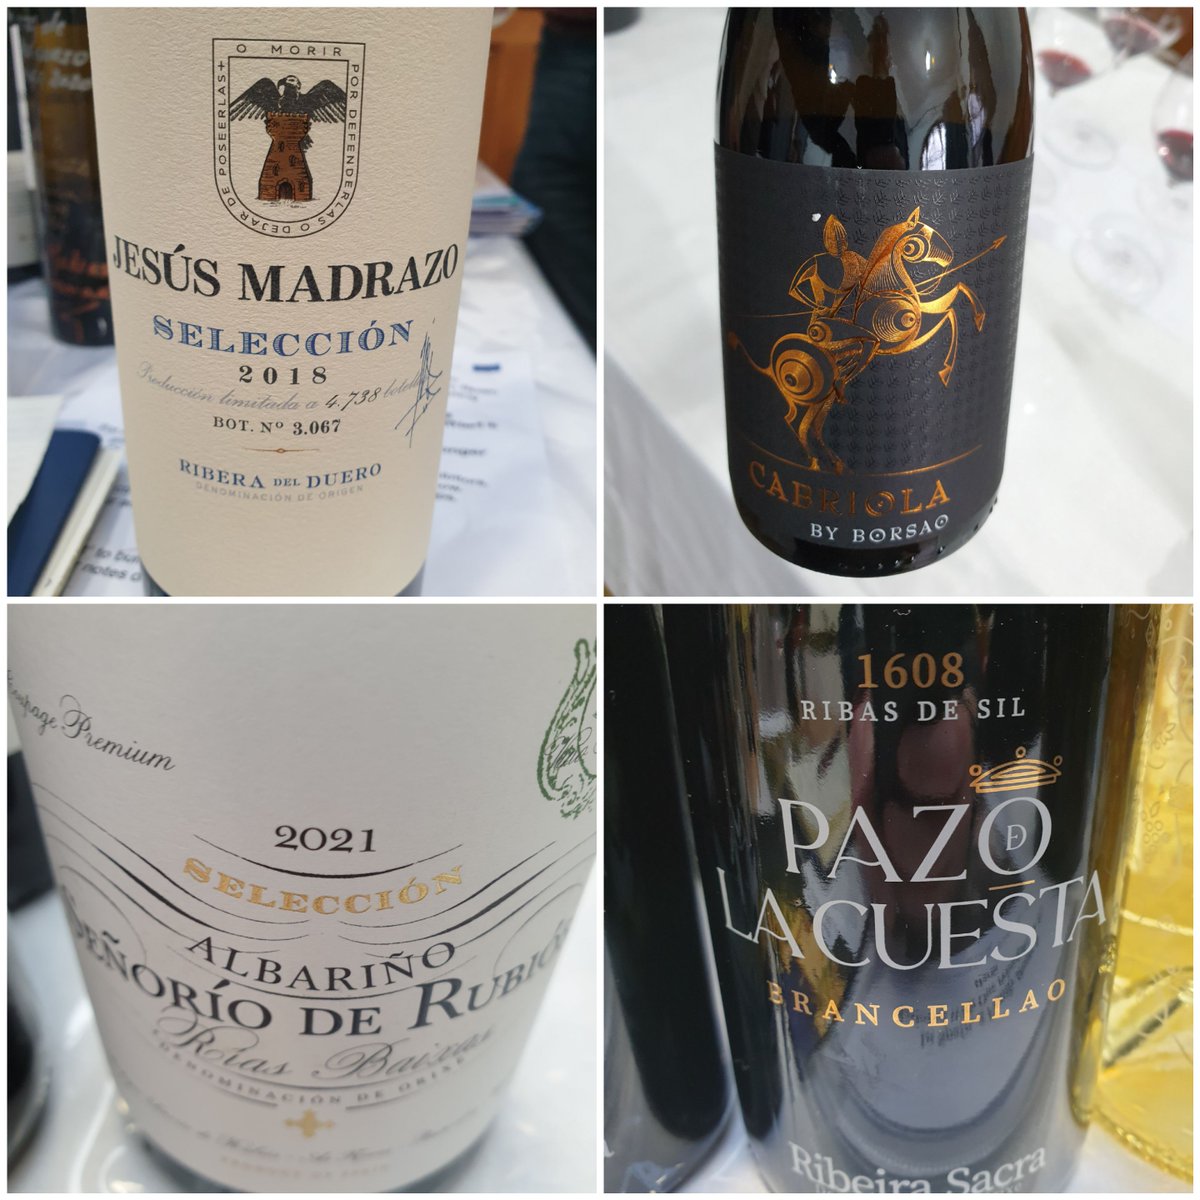 Terrific Wines from Spain! 🇪🇸
-@modestmerchant #Treixadura heaven+other treasures
-@BorsaoBodegas Campo De Borja beauty
-@SrodeRubios ace #Albariño
-Intriguing #PazoDeLaCuesta Brancellao
-Classy Catalonian charm from @RafolsdelsCaus
-Jesús Madrazo #Priorat perfection
#spanishwine